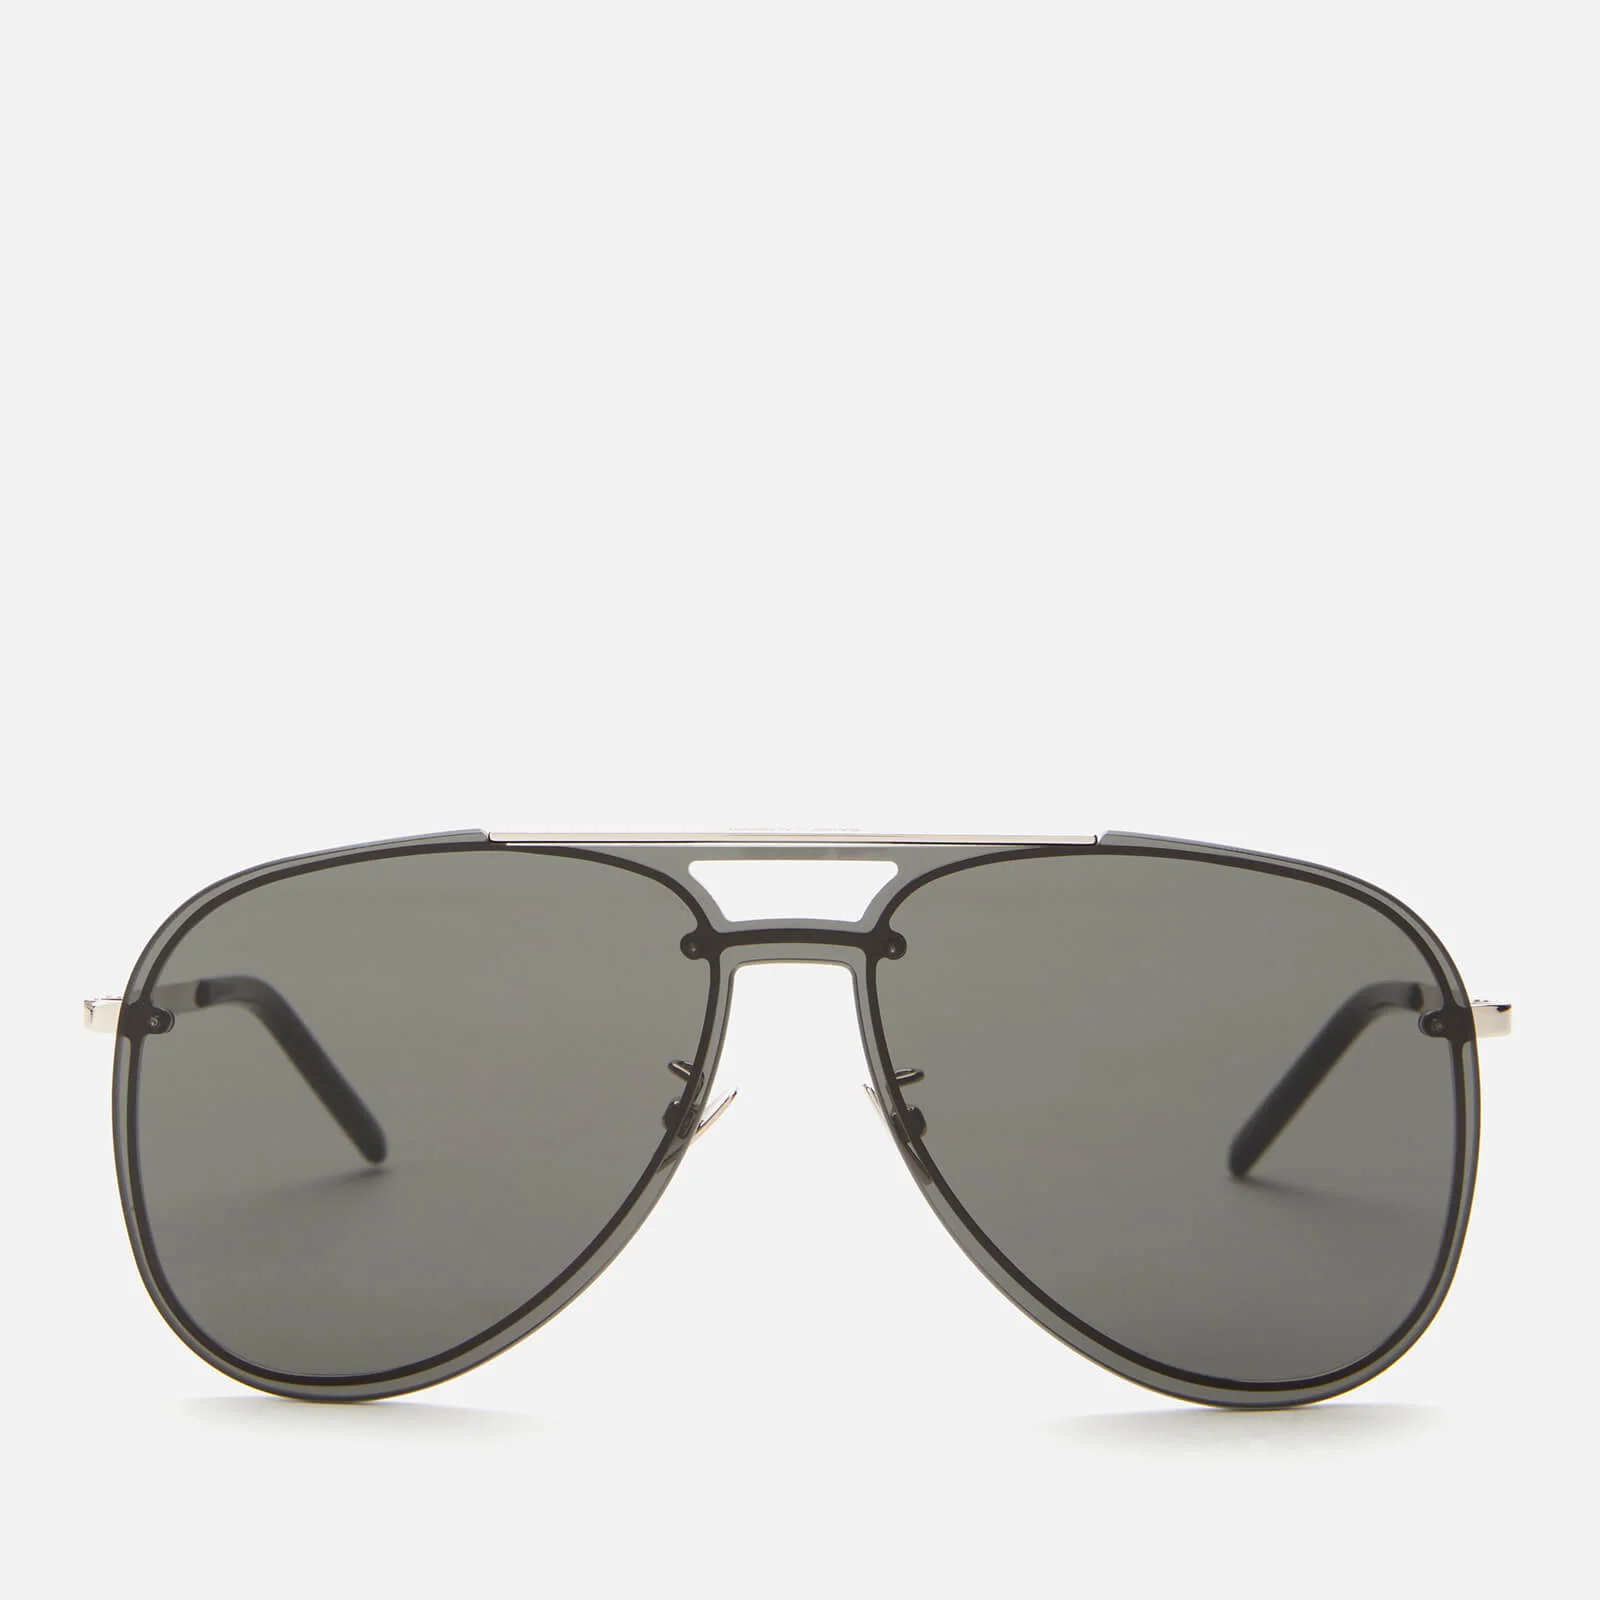 Saint Laurent Men's Classic 11 Mask Aviator Sunglasses - Silver/Grey Image 1